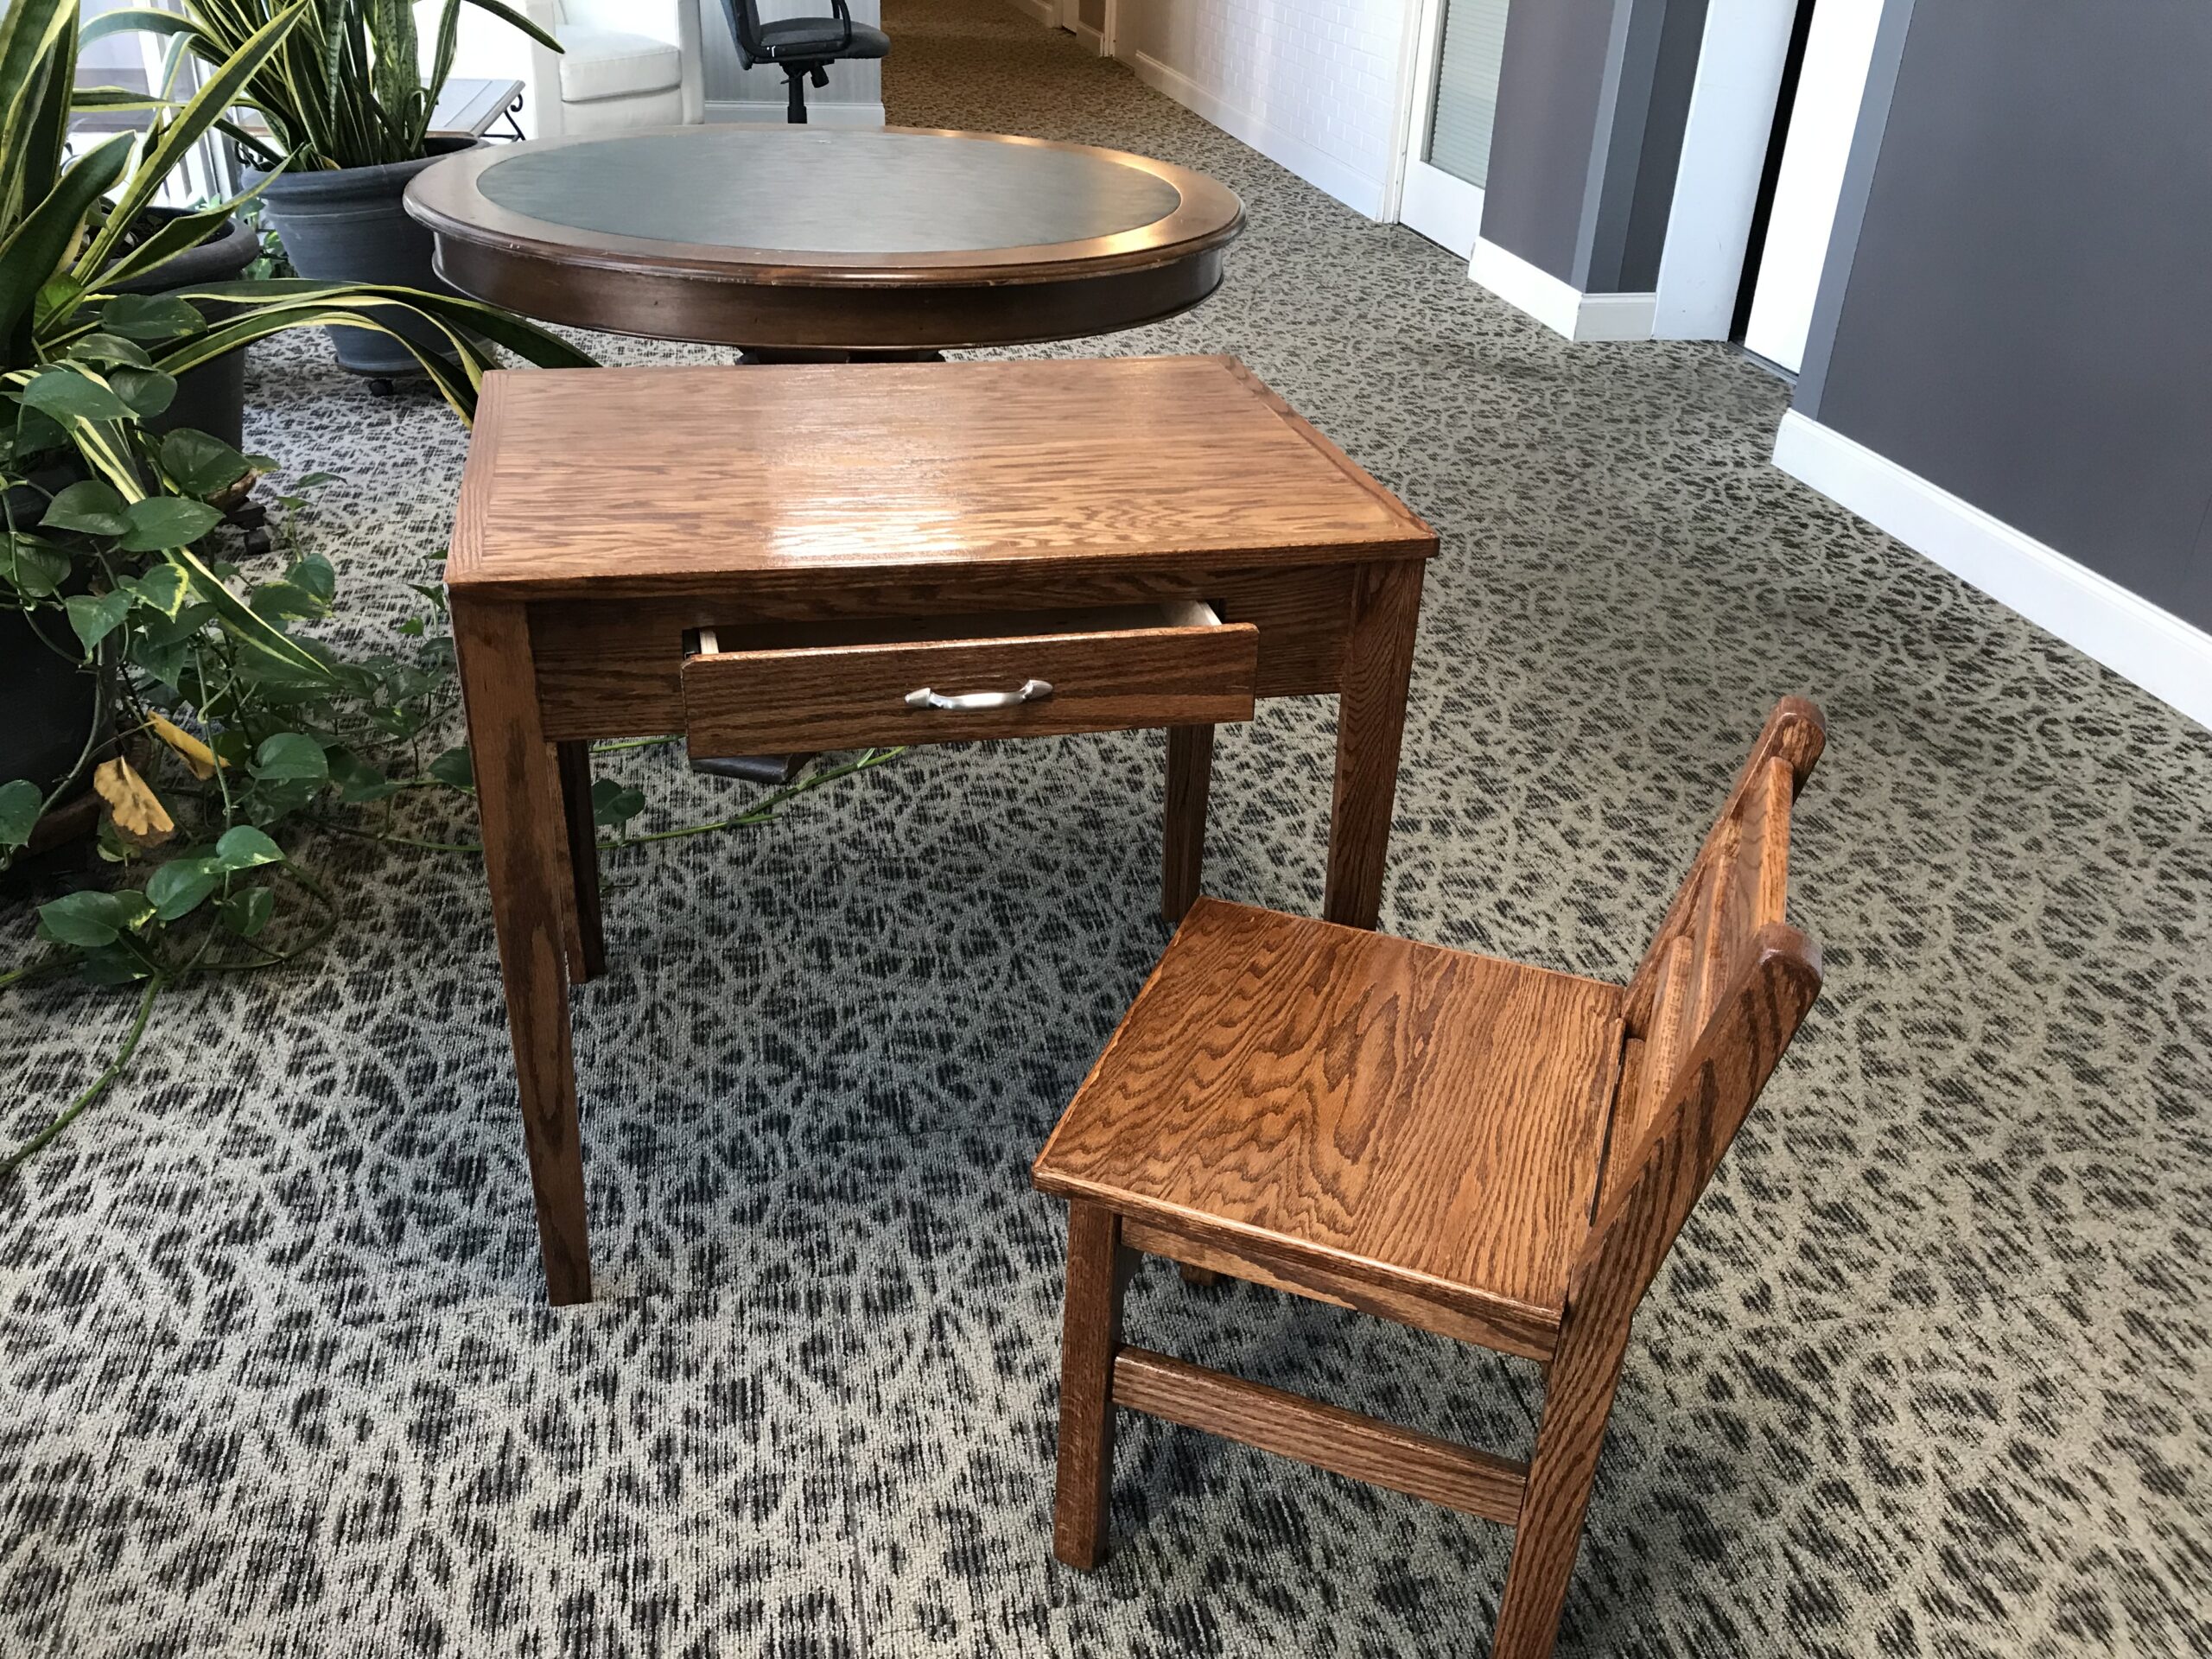 HAART – Children’s Desks & Chairs